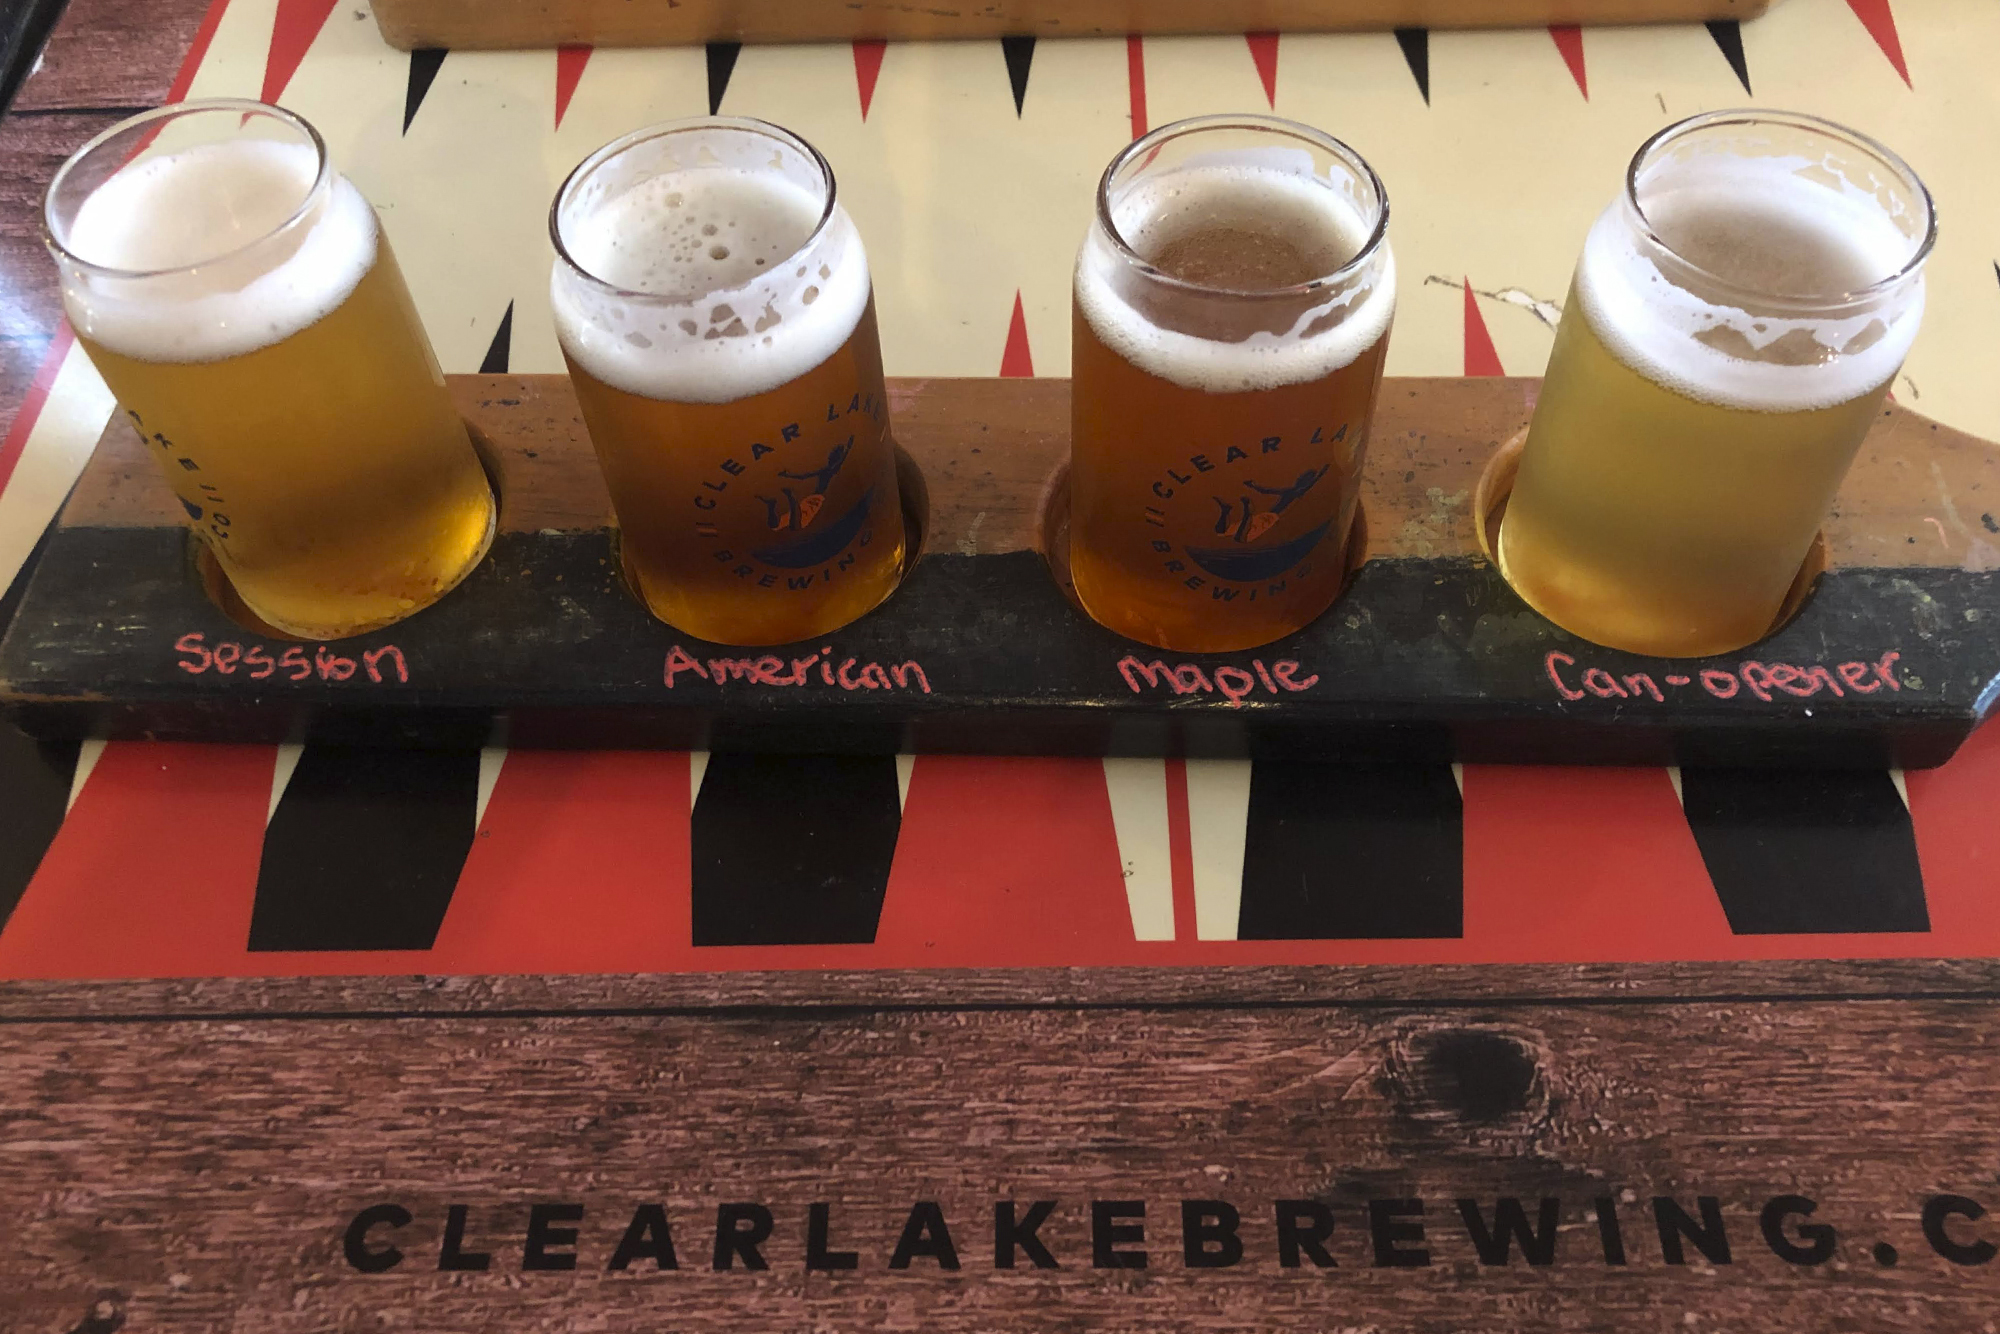 Muskoka BeerSpa and Clear Lake Brewery